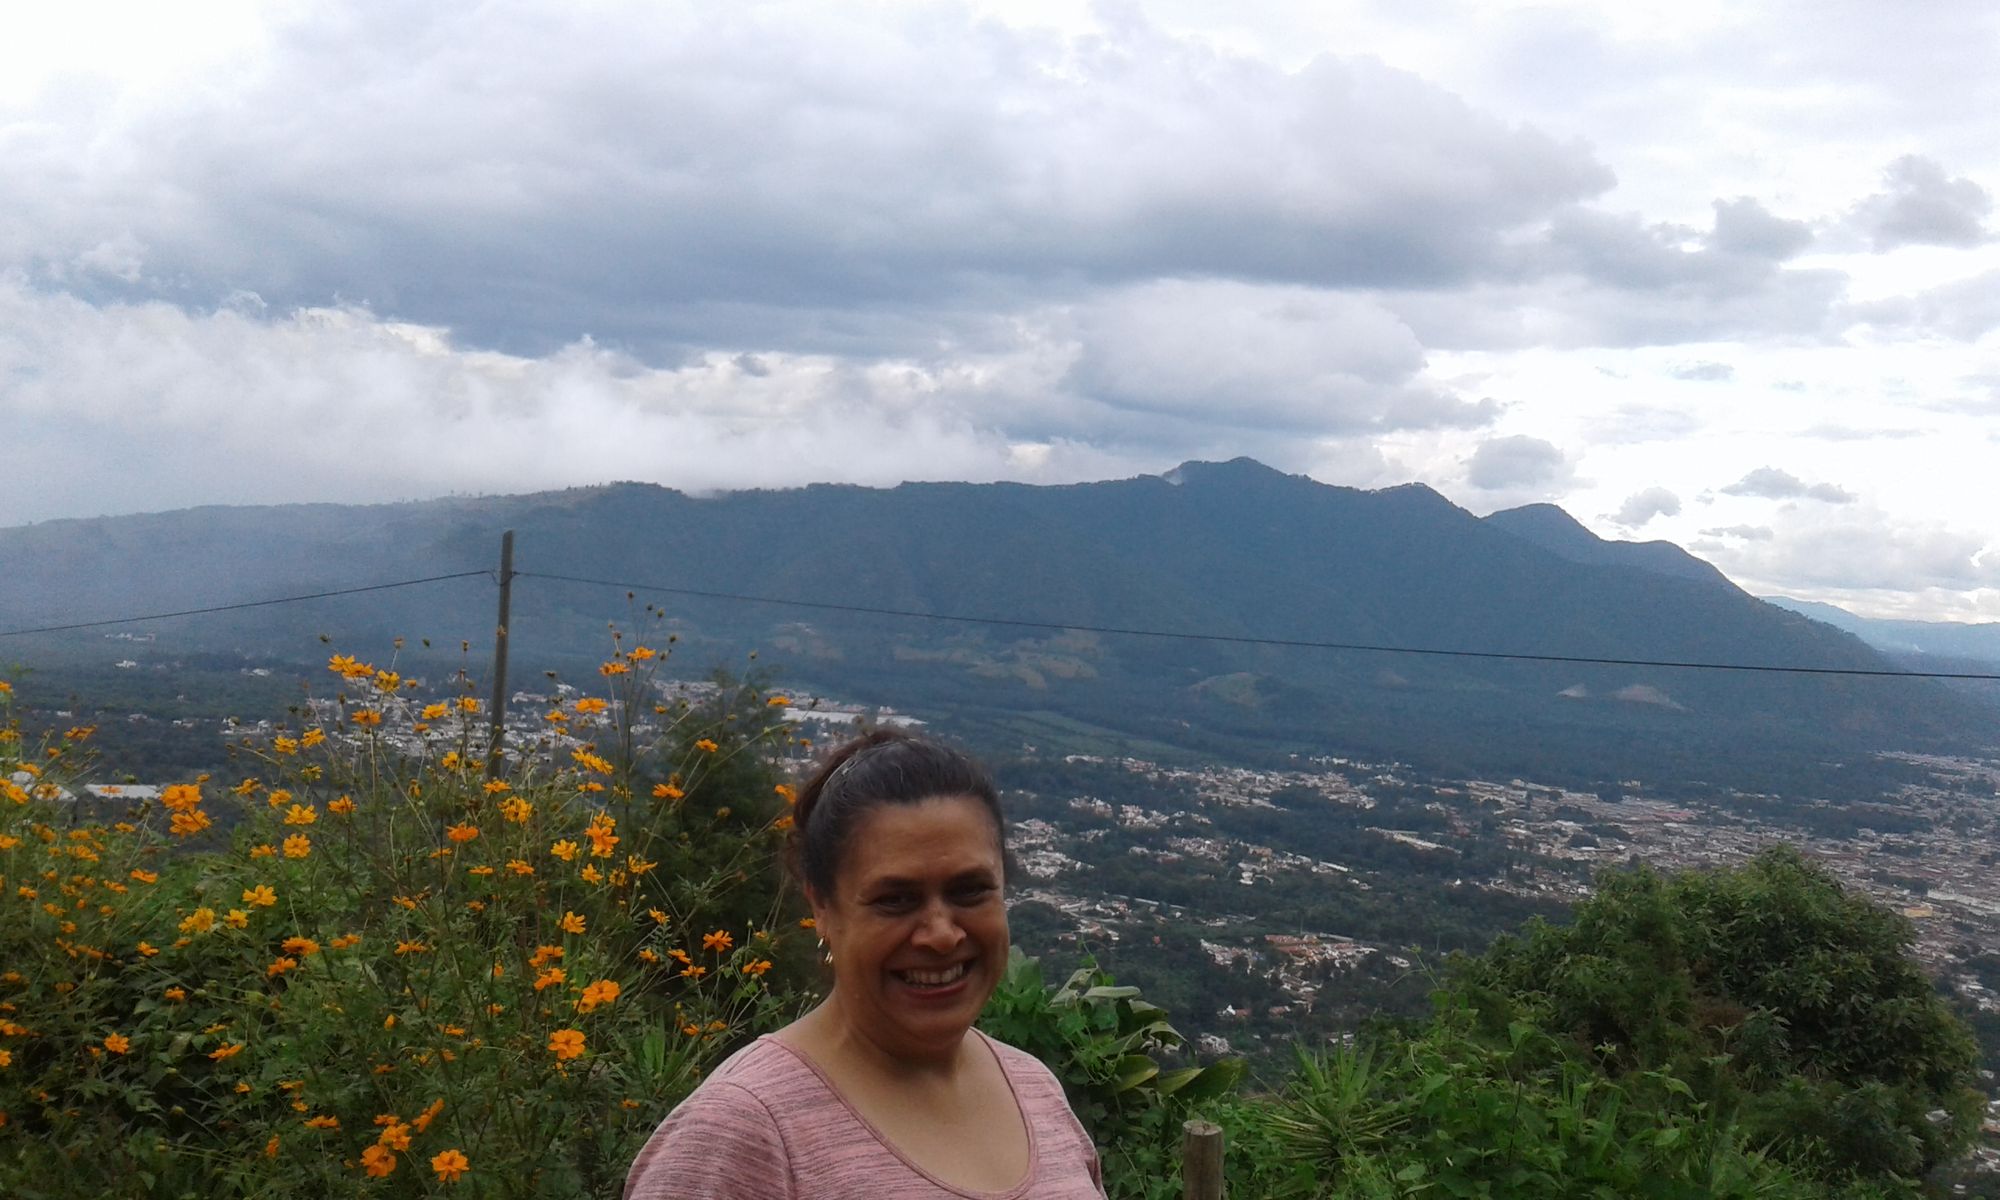 Meet Irma Vela, one of our amazing Spanish teachers from Guatemala!